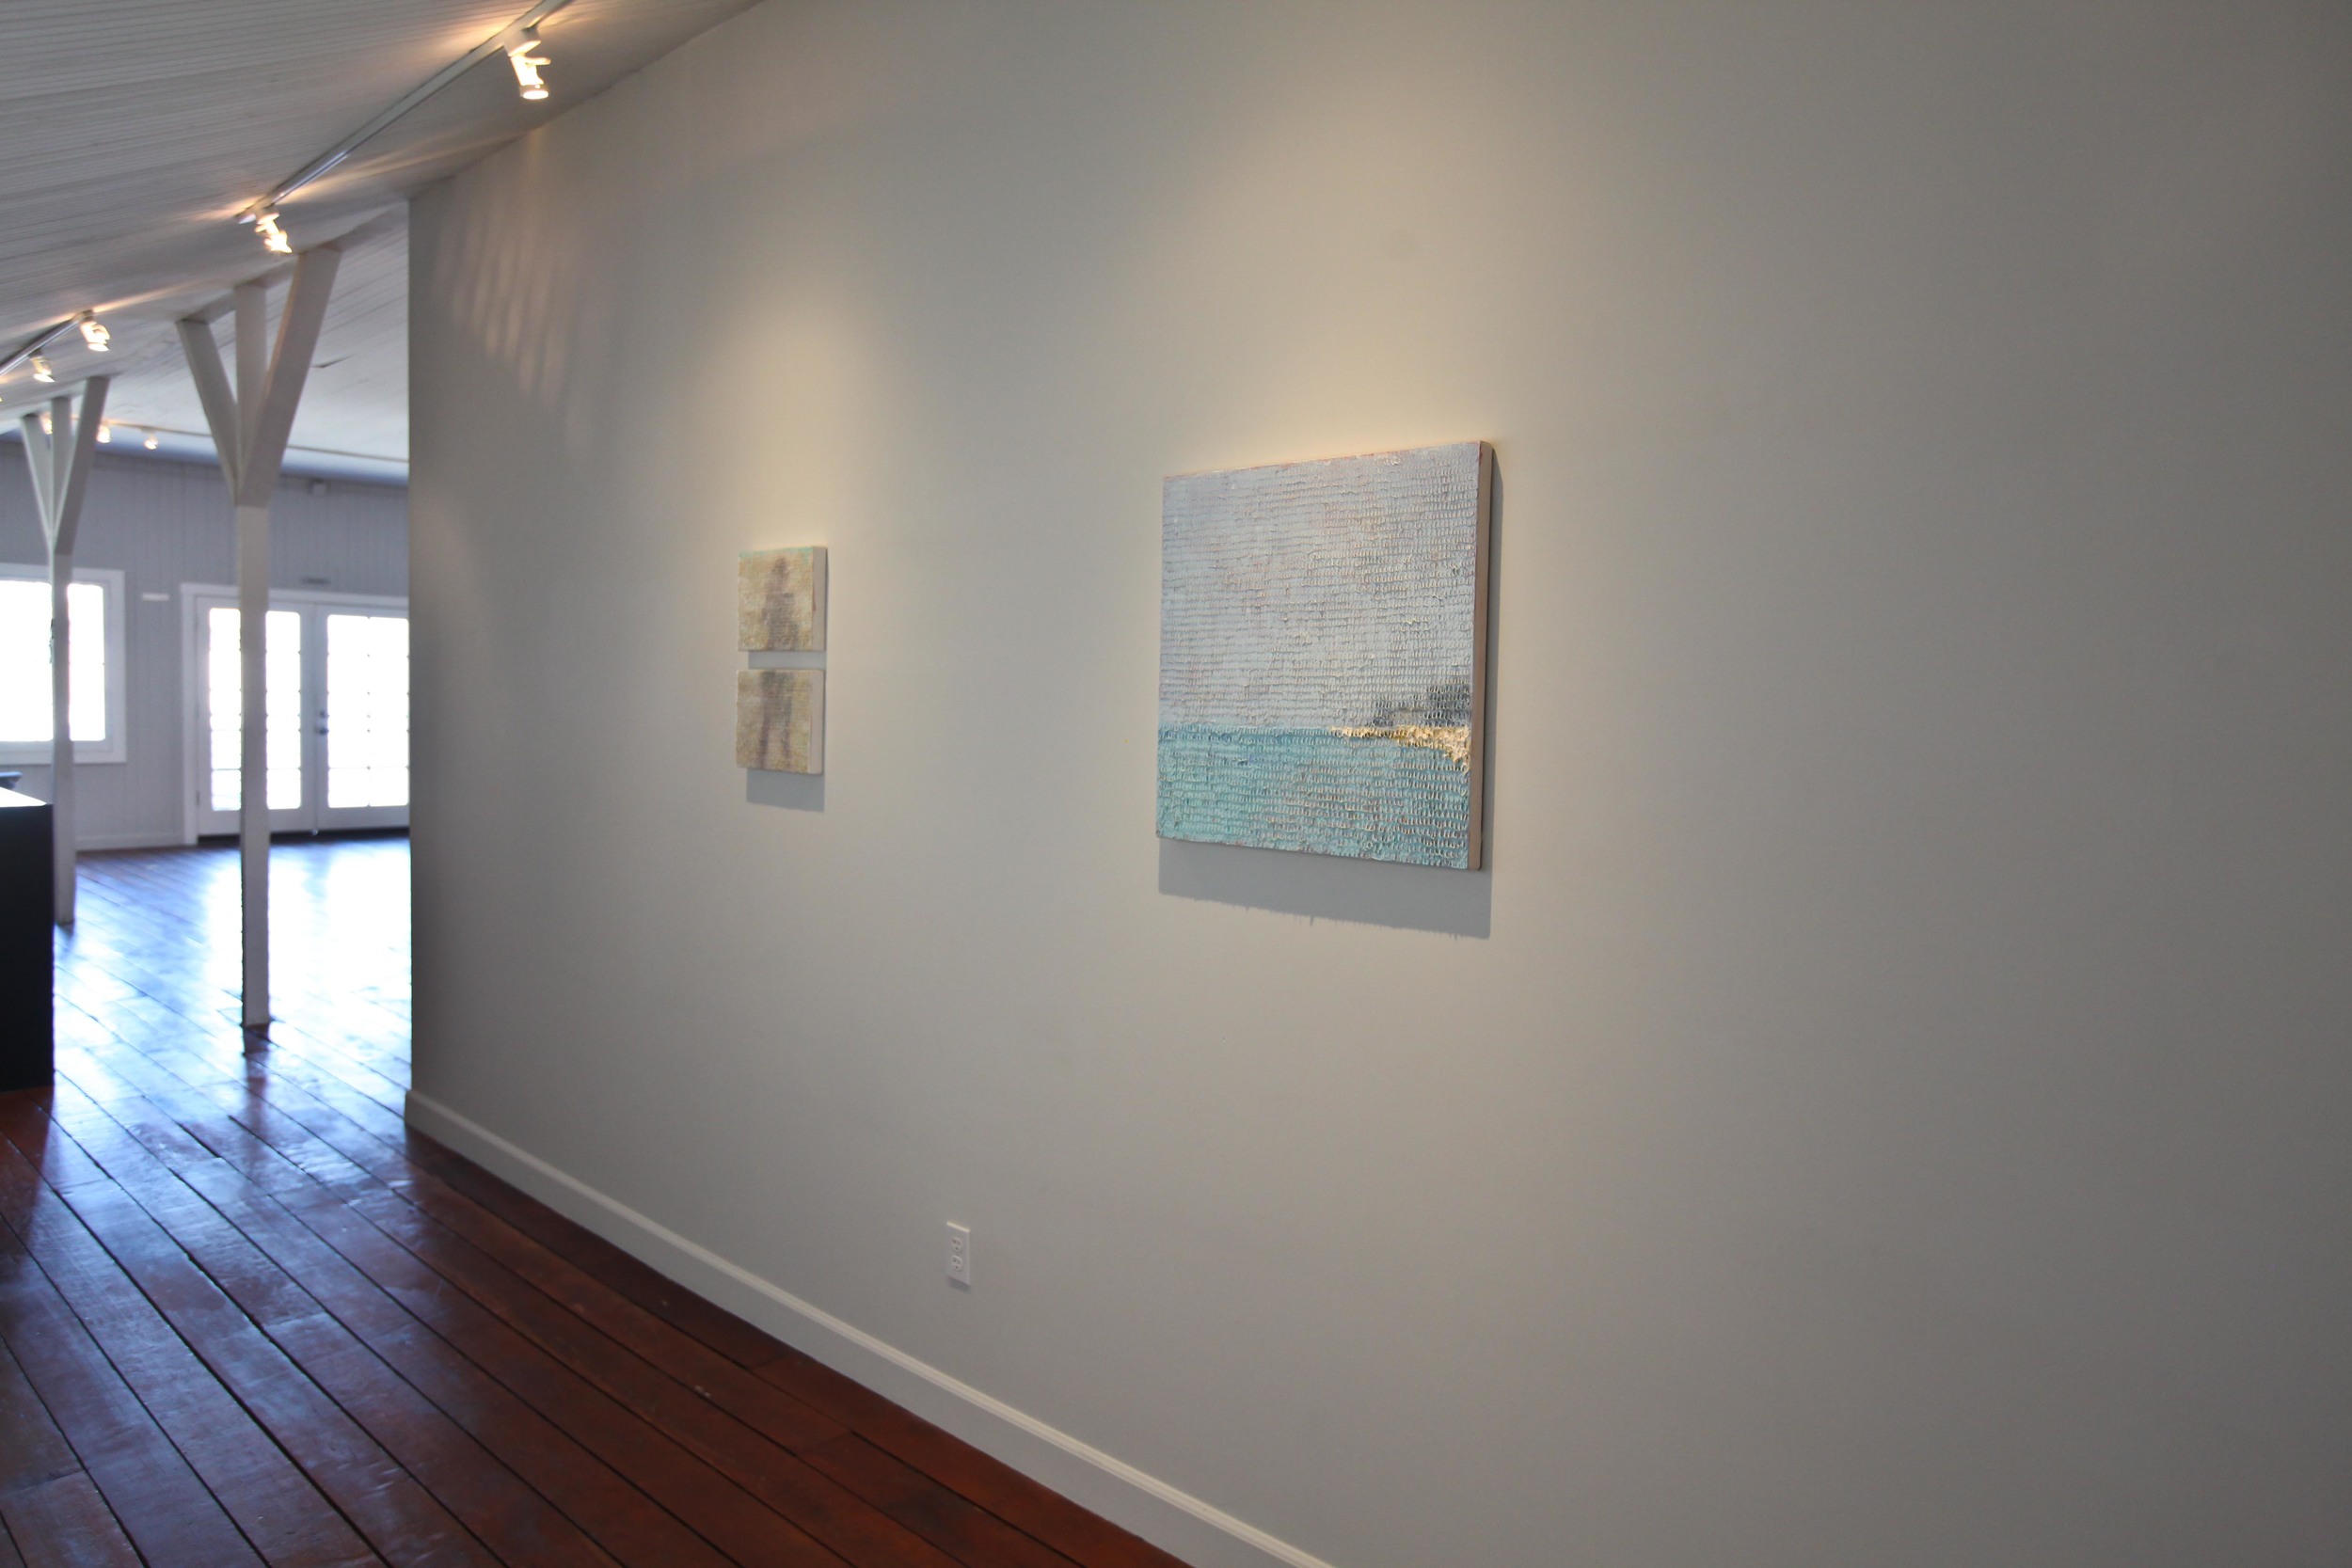  Vessel Gallery, 2013 